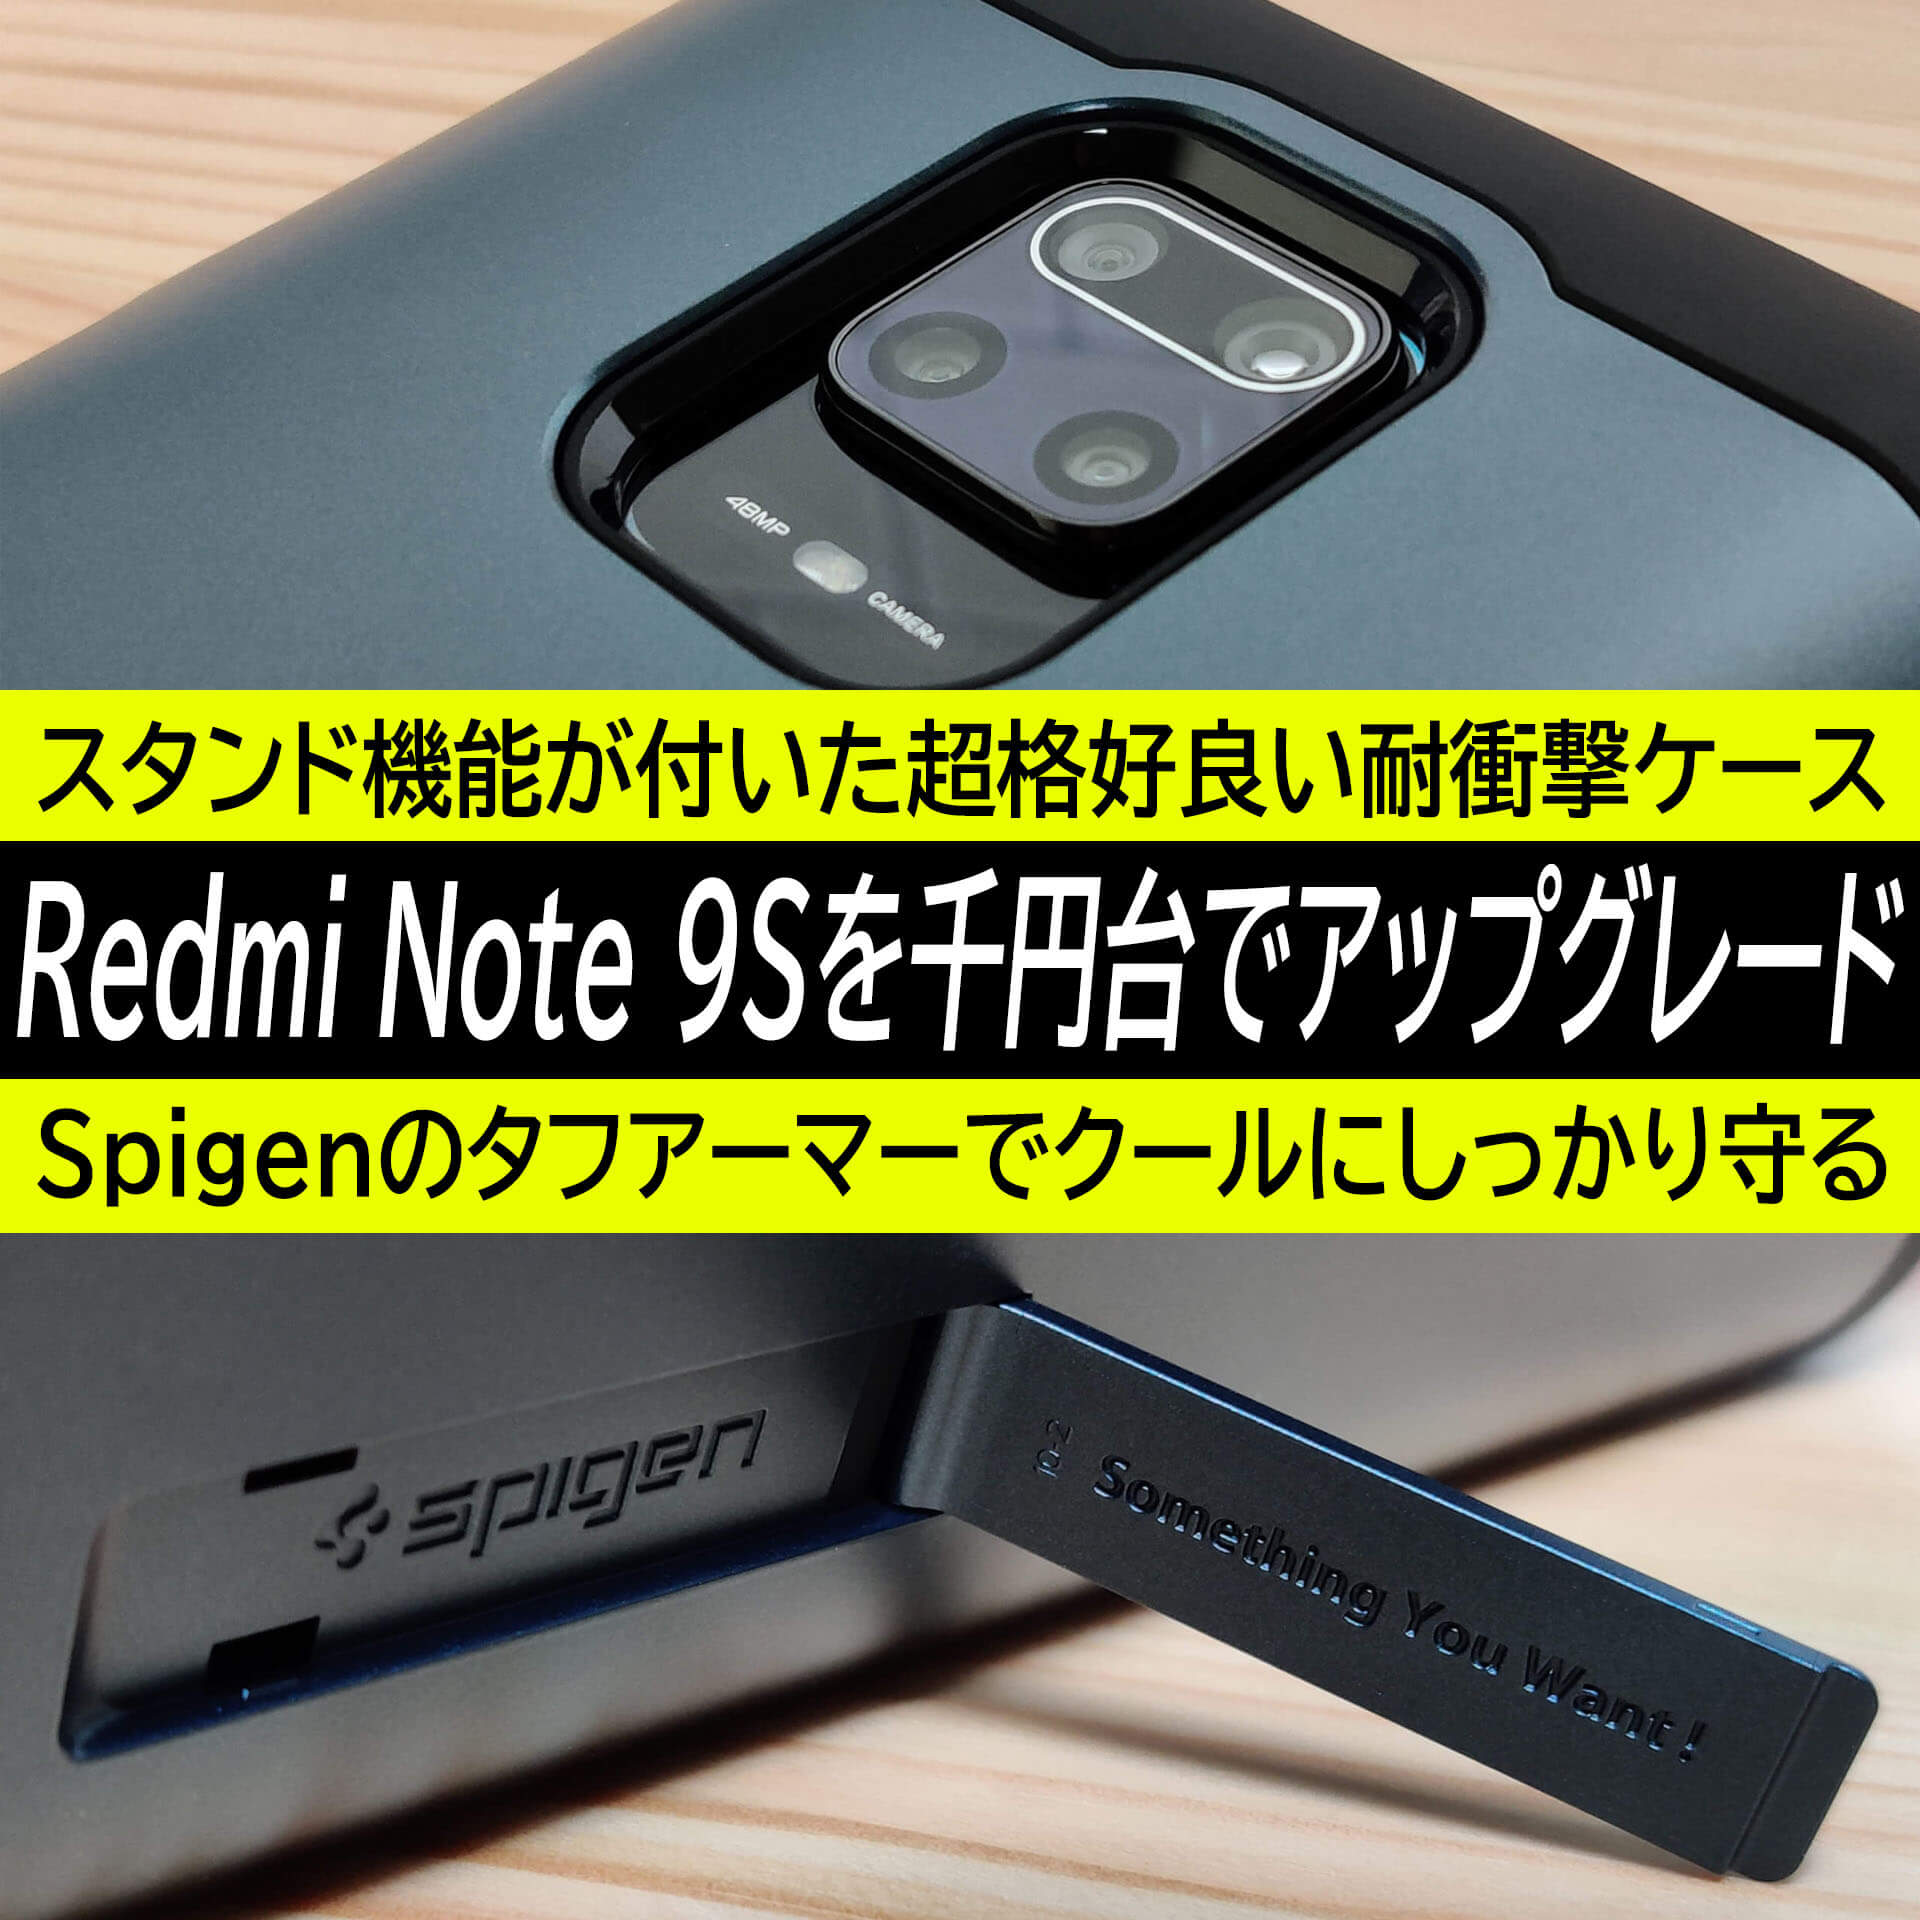 Xiaomi Redmi Note 9S 限定 6GB Spigenタフアーマー